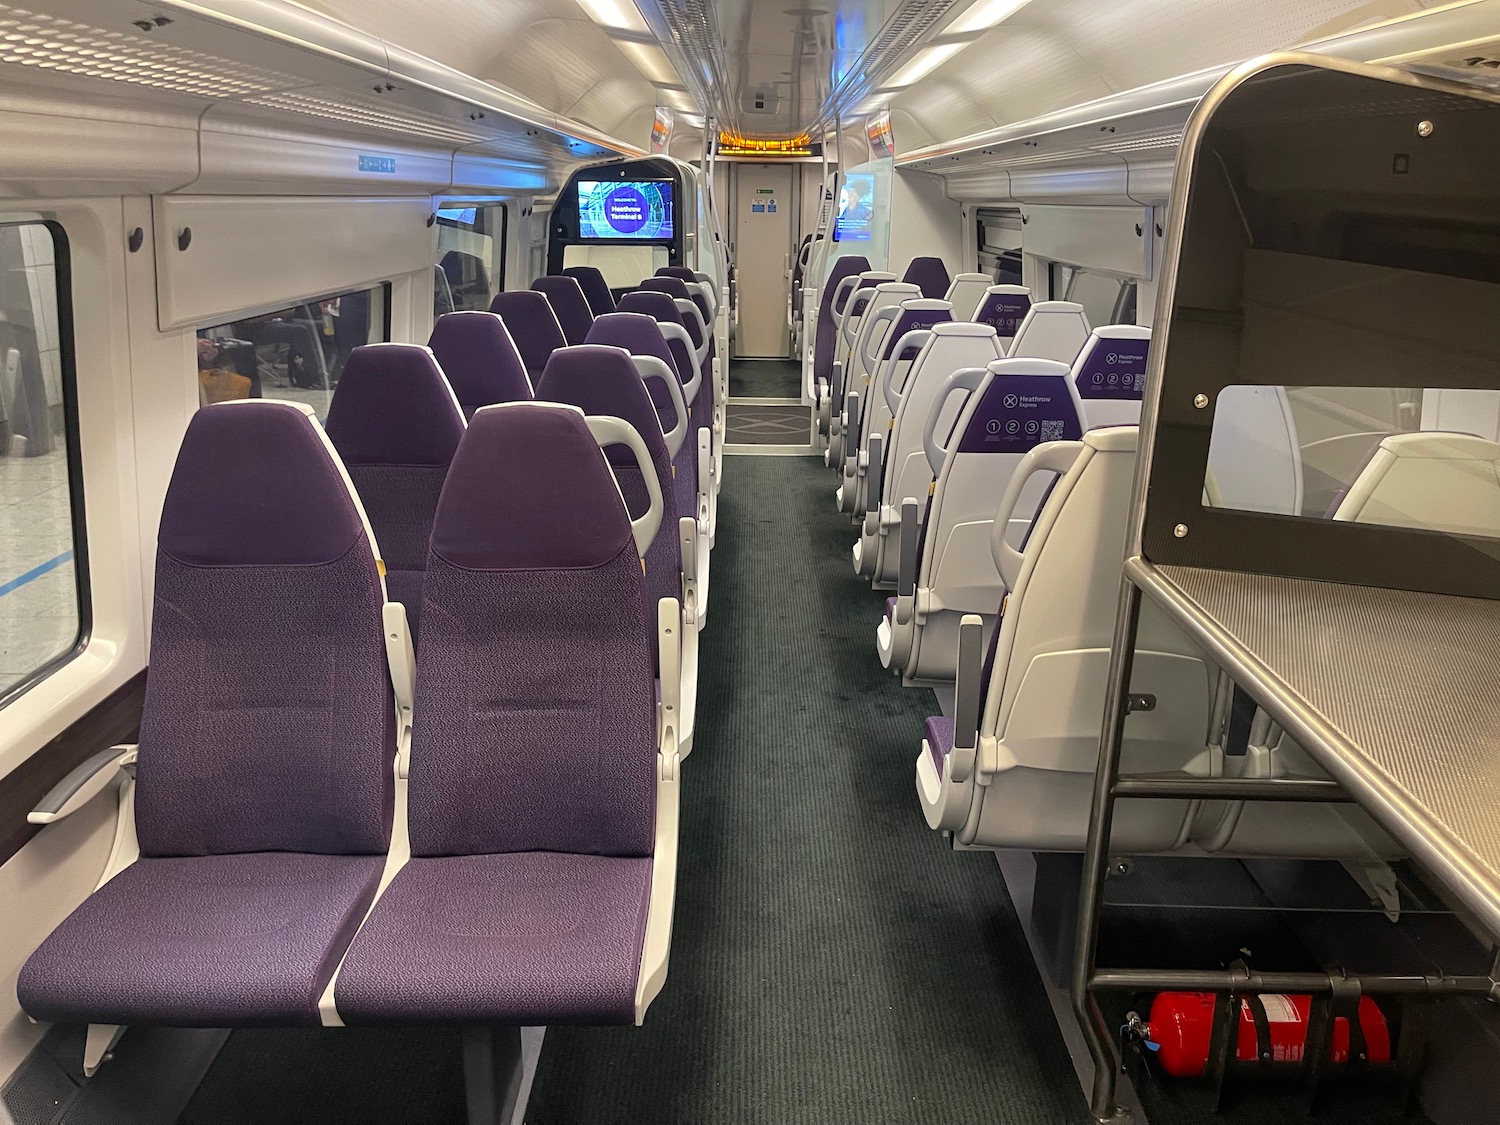 a train with purple seats